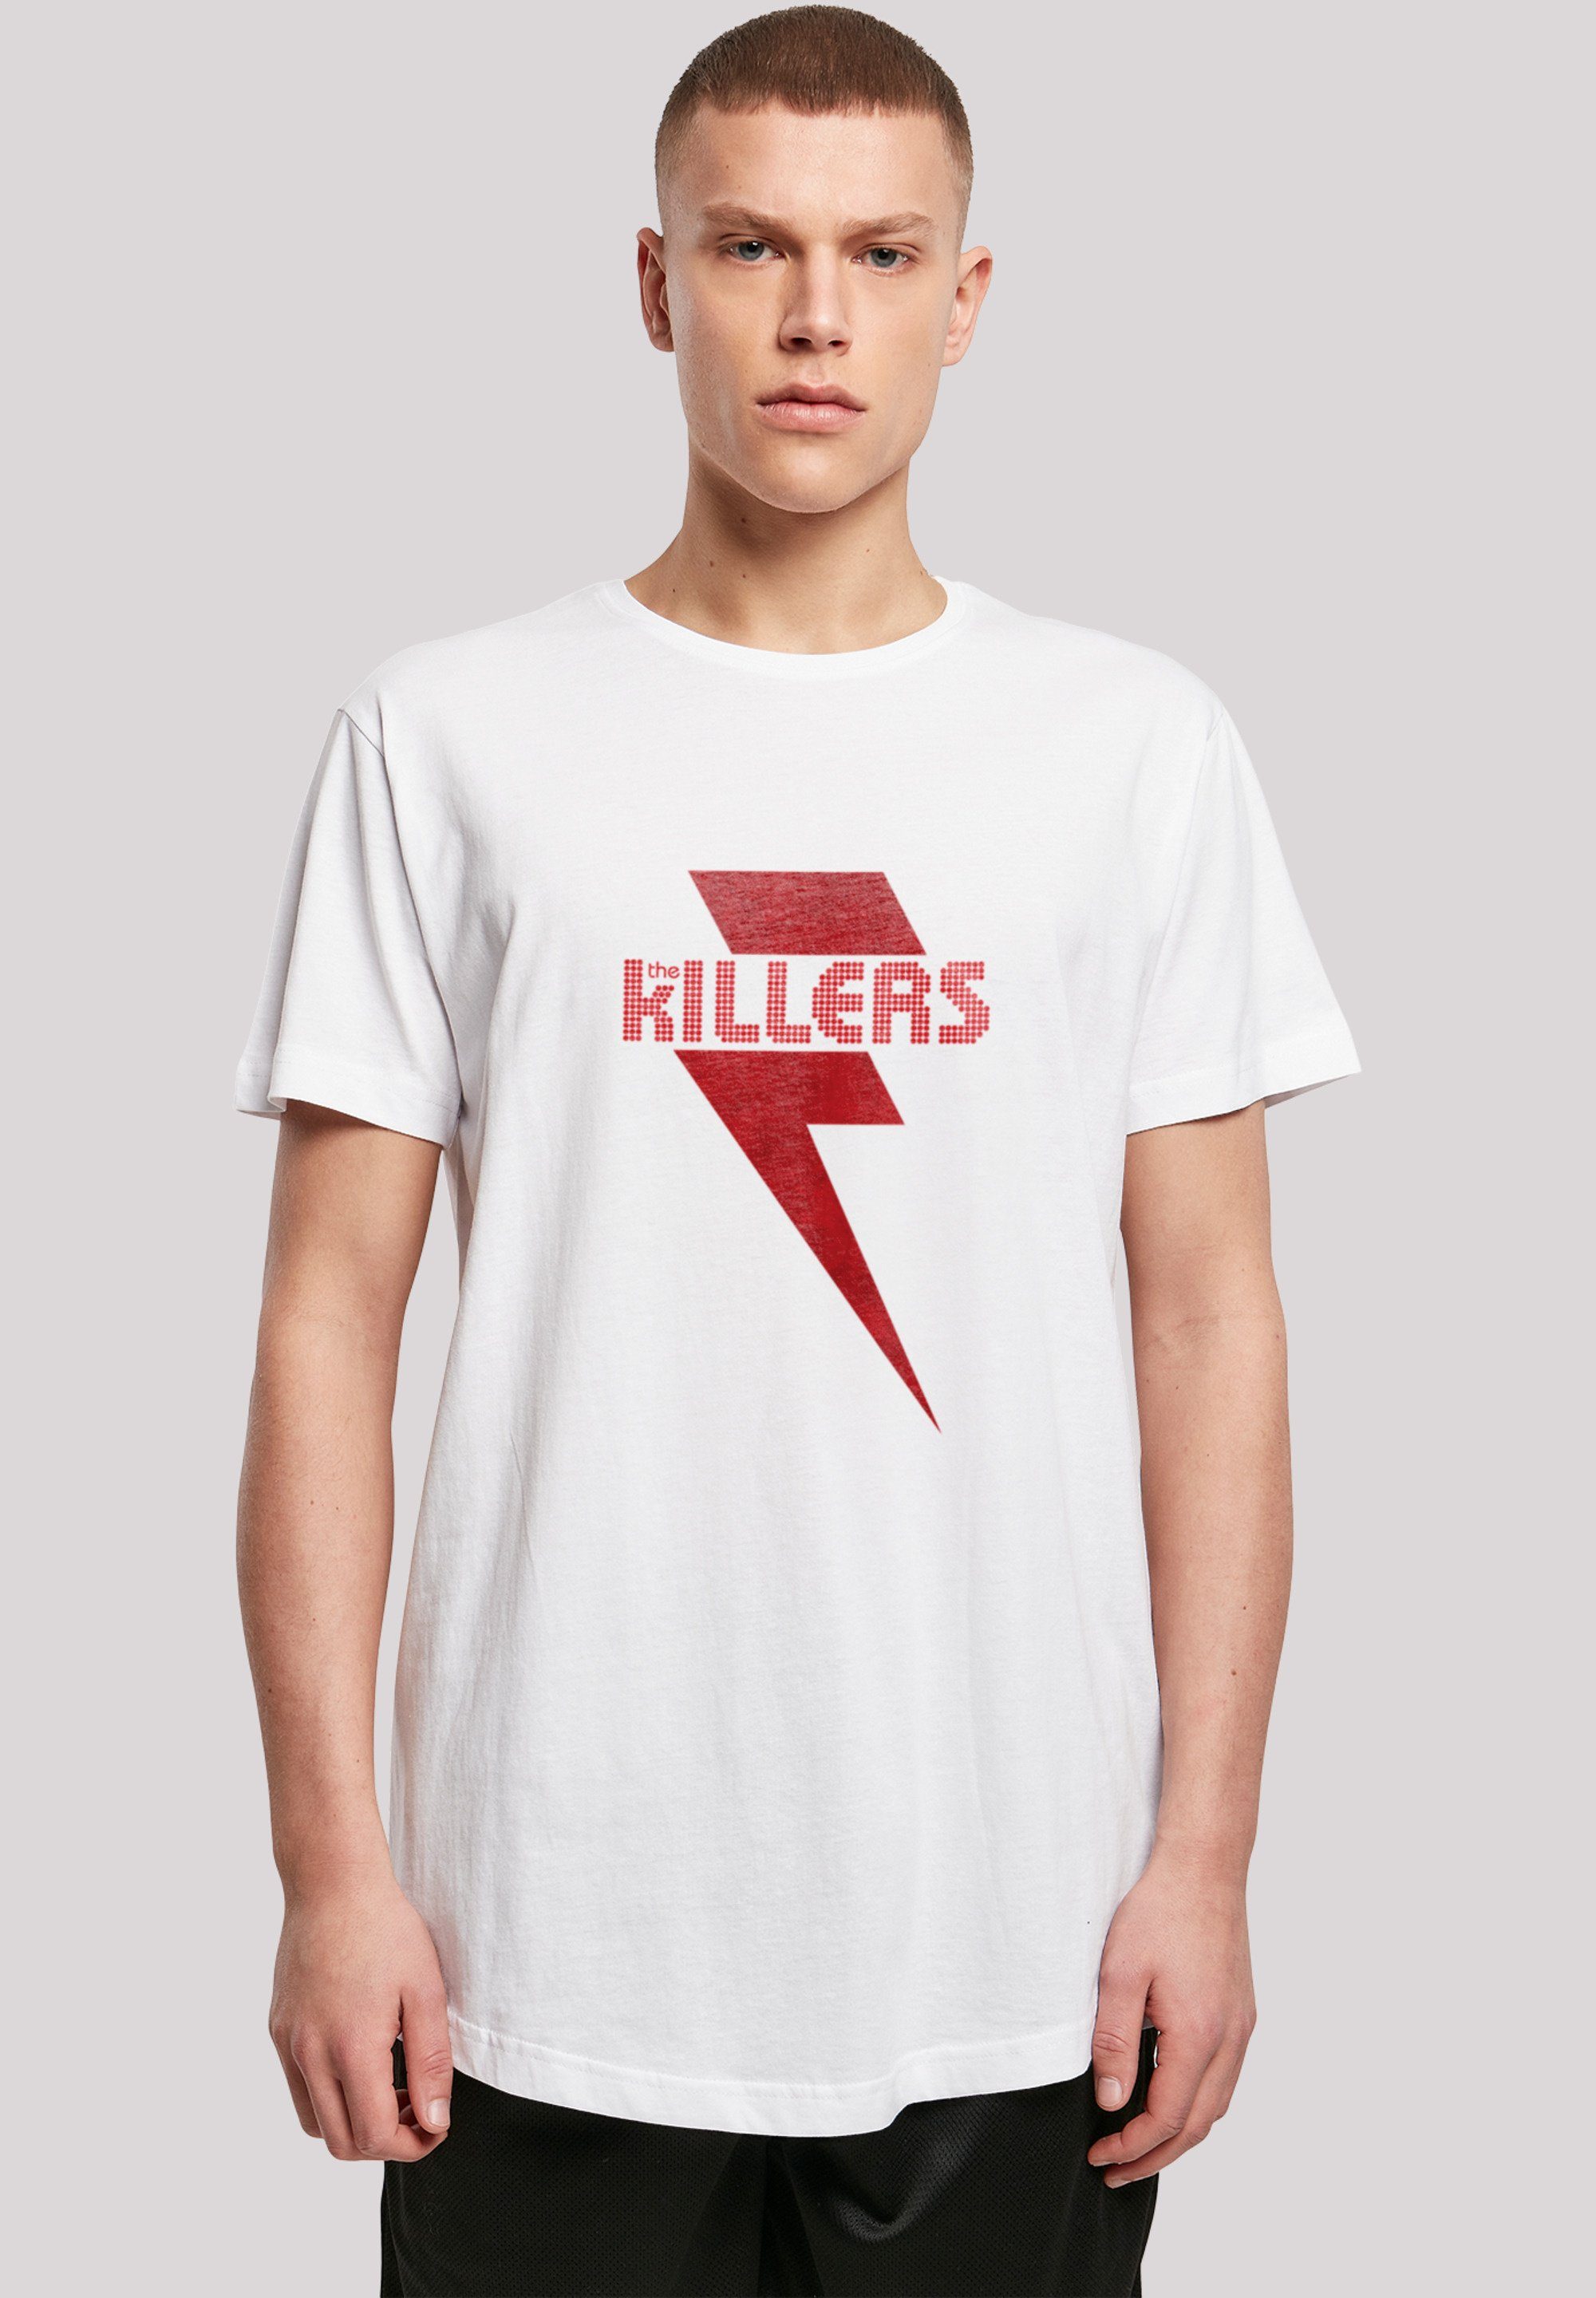 Sehr Killers Red T-Shirt Band mit Tragekomfort Rock Print, weicher Baumwollstoff hohem F4NT4STIC Bolt The